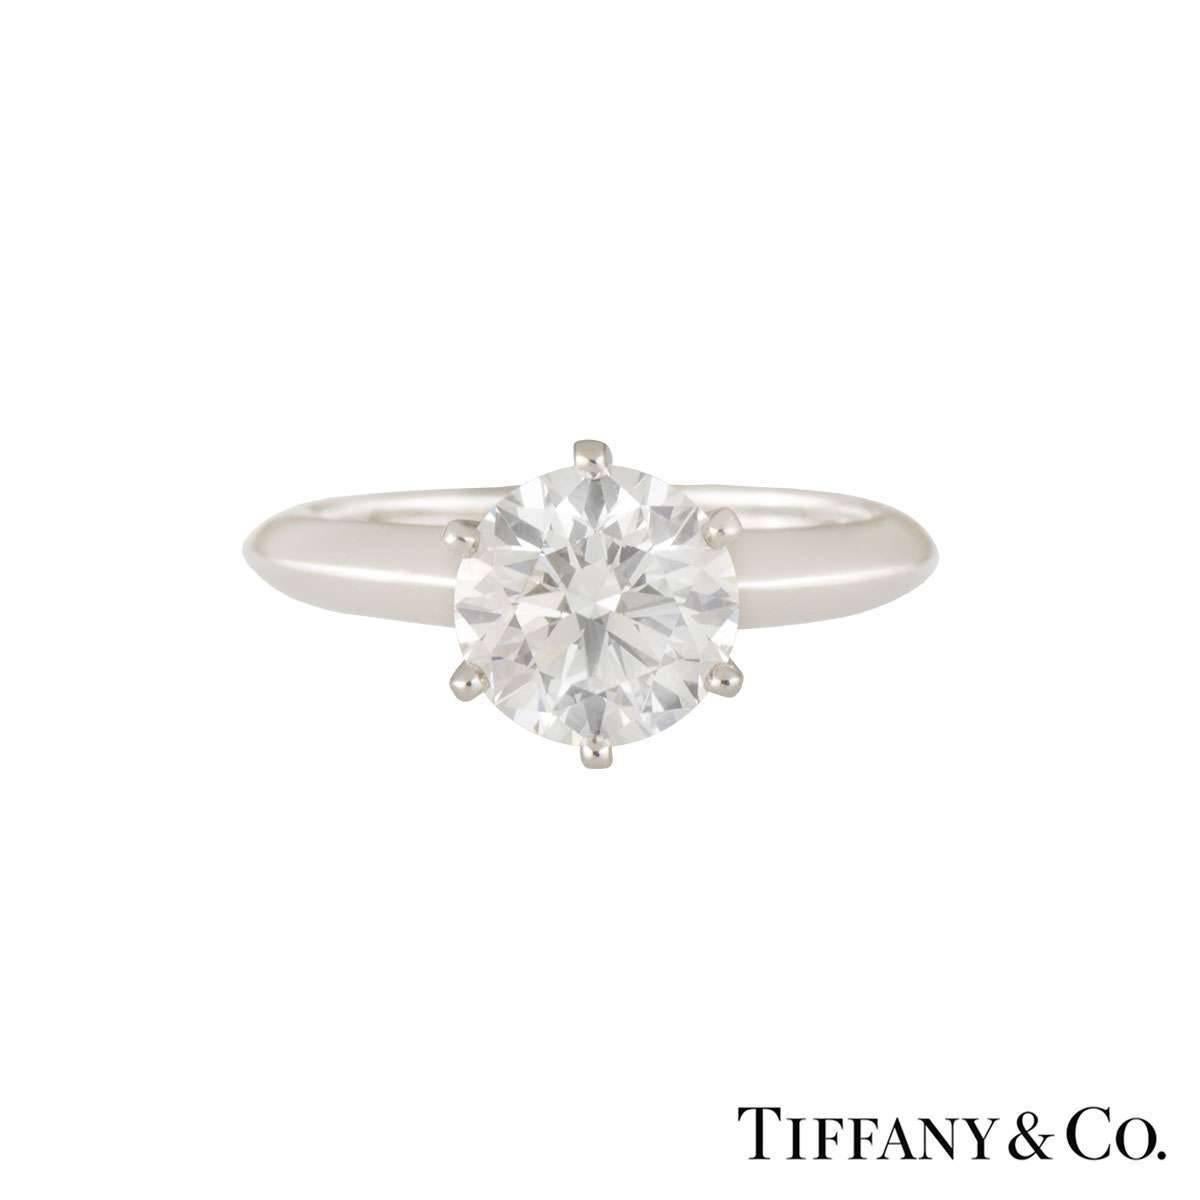 Round Cut Tiffany & Co. 1.79 Carat Diamond Platinum Setting Band Ring